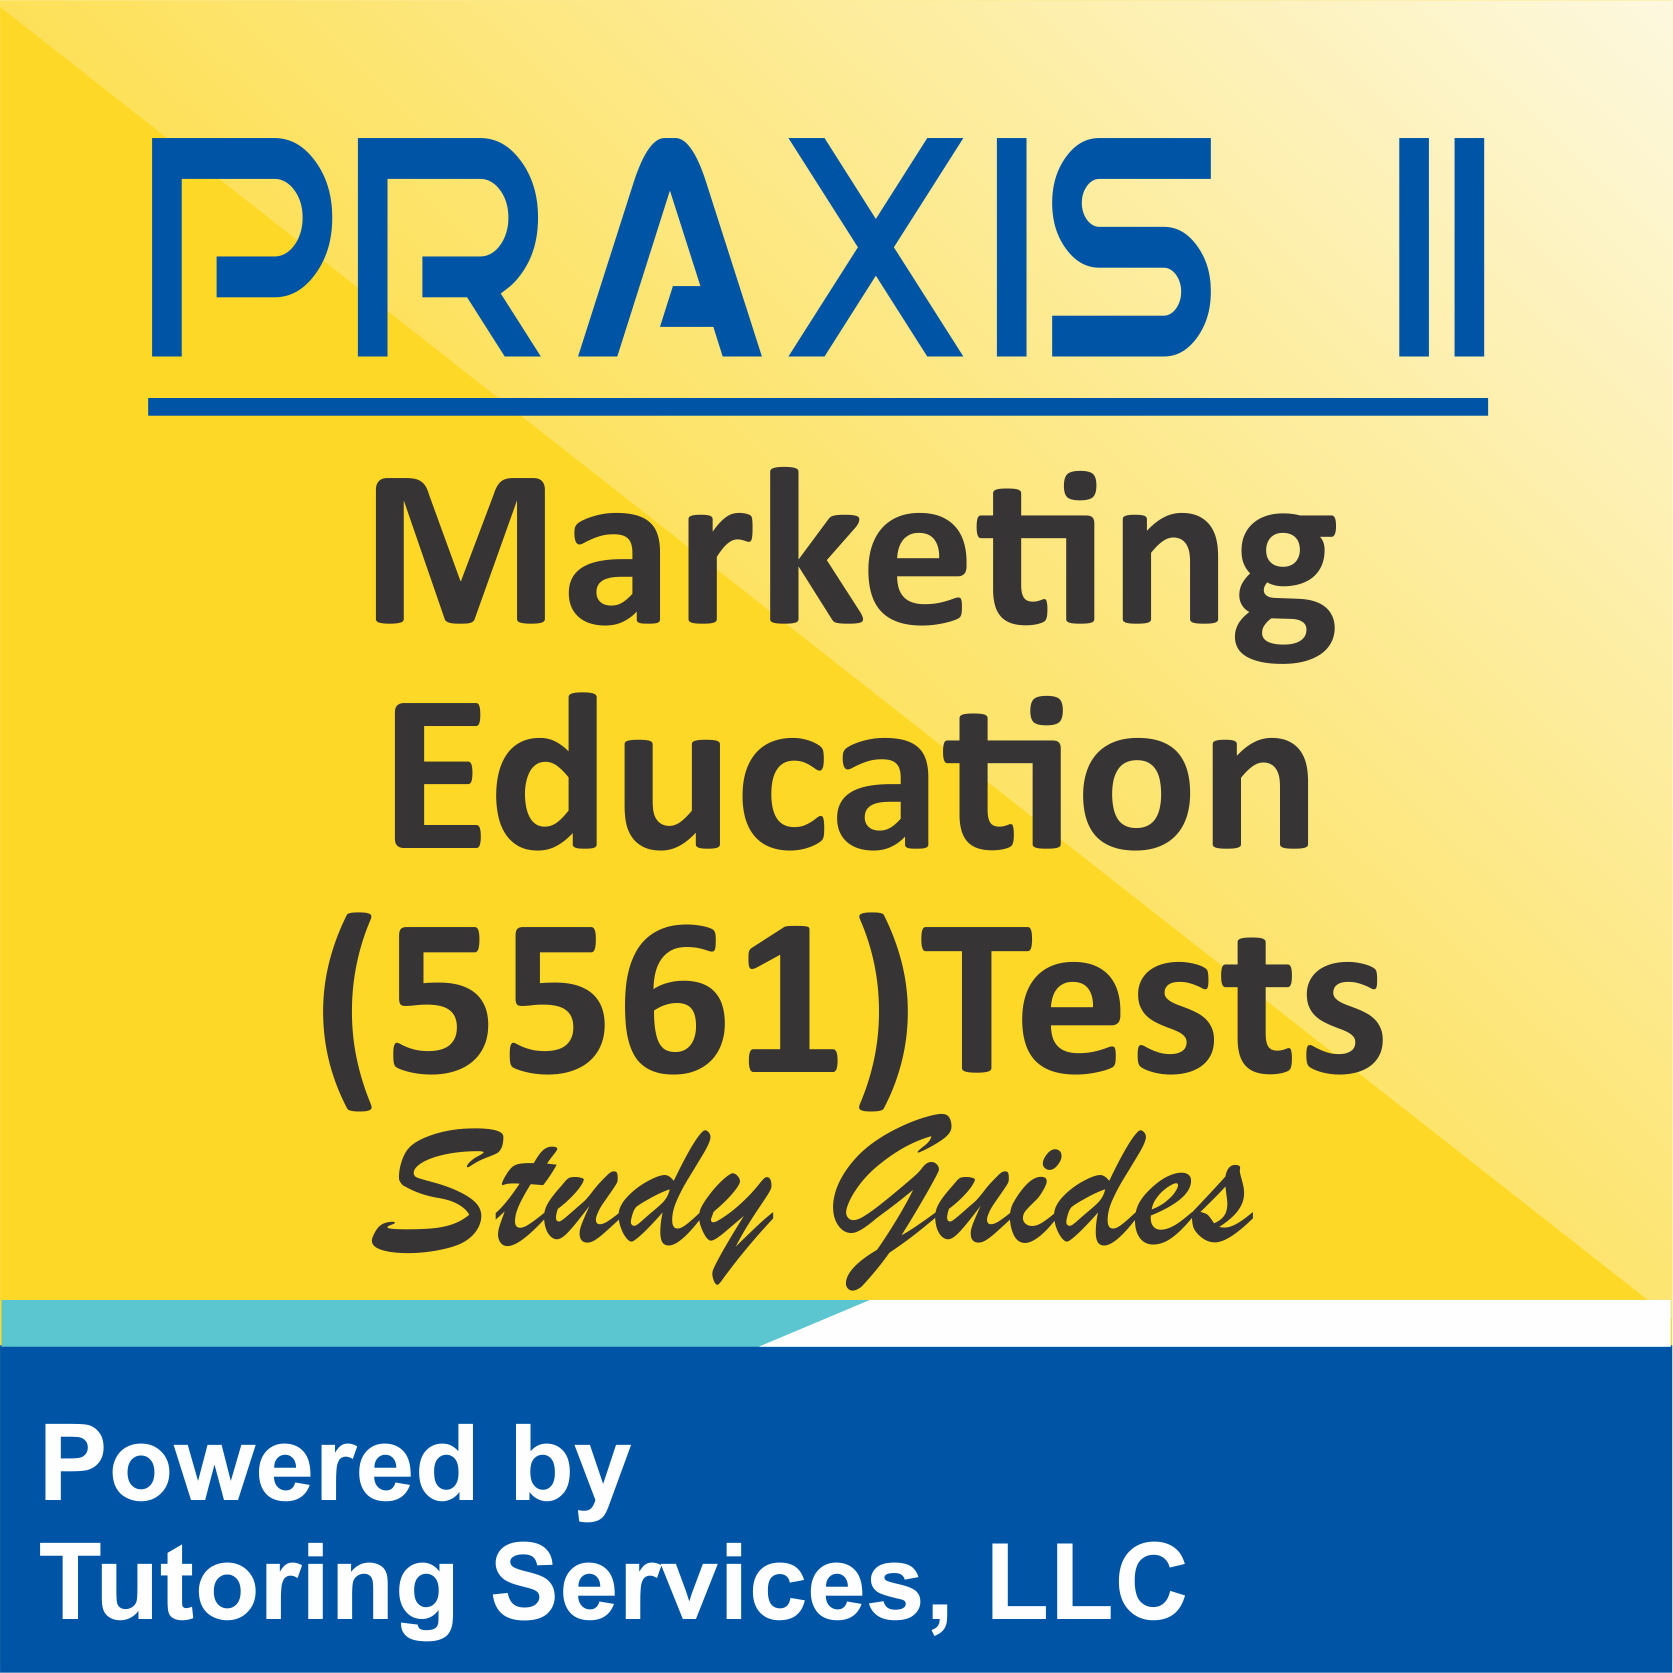 Praxis II Marketing Education (5561) Examination Format